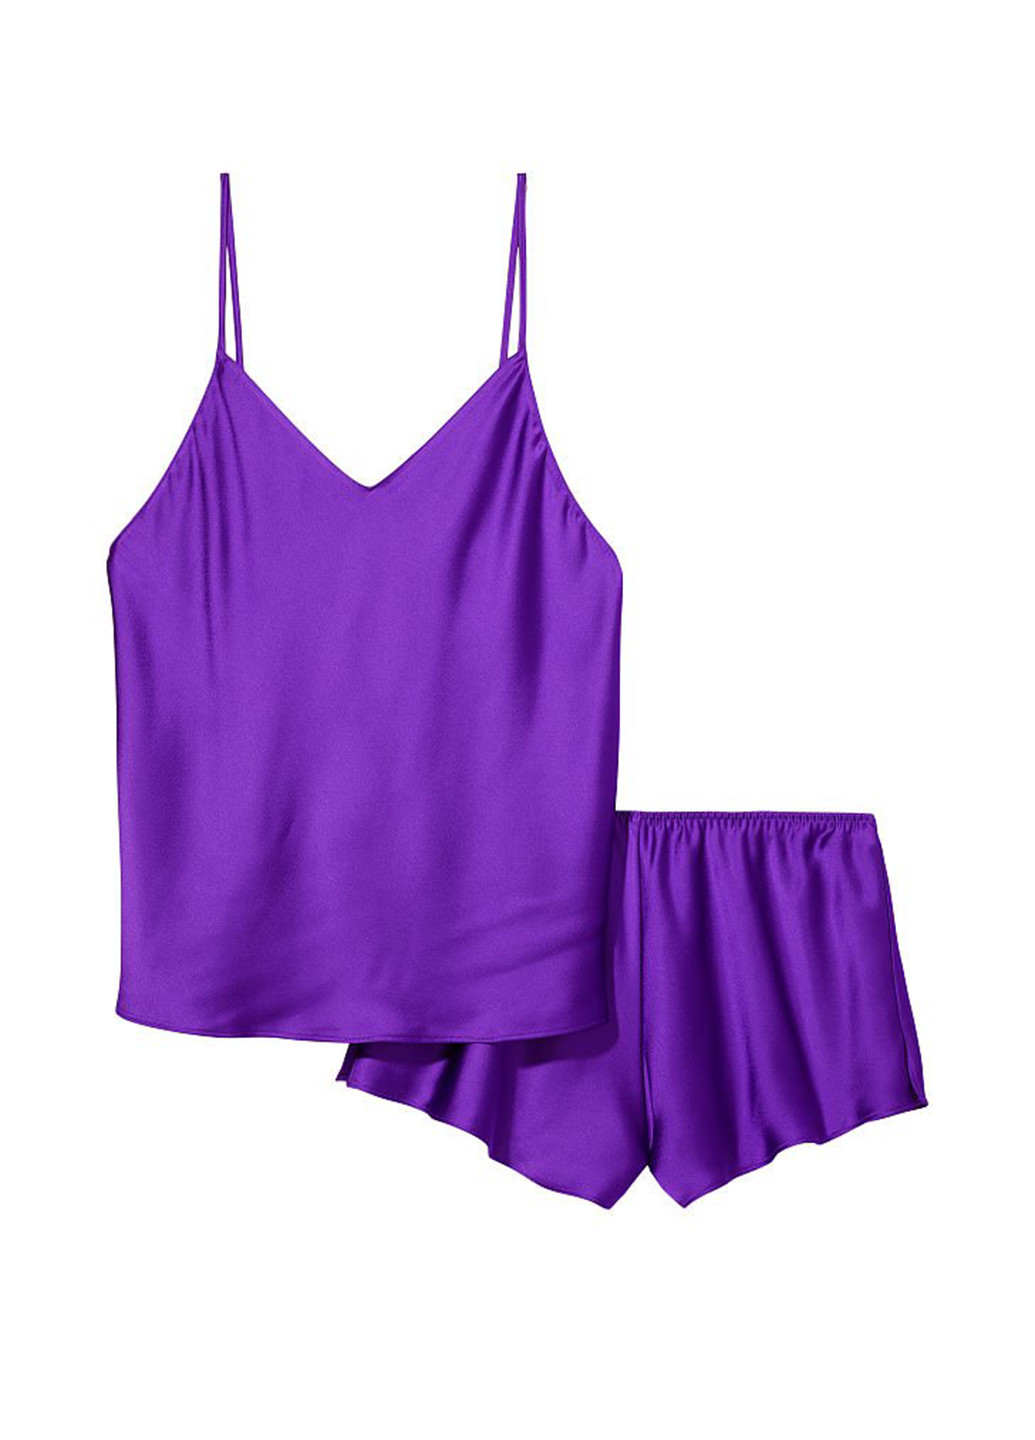 Фіолетова всесезон піжама (майка, шорти) майка + шорти Victoria's Secret